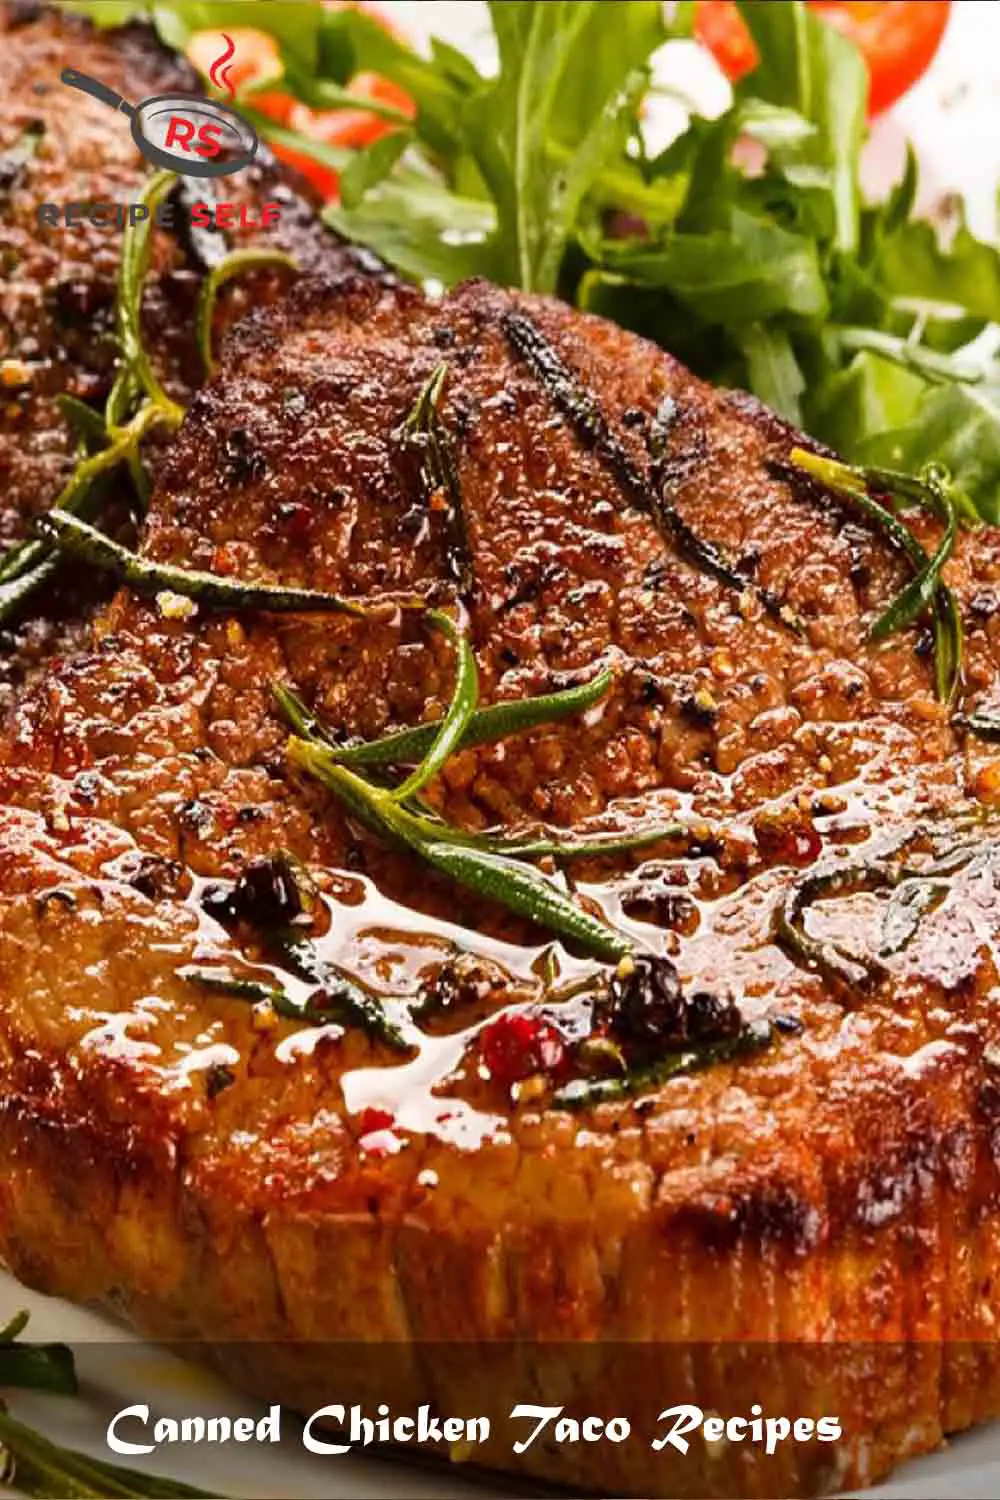 Grilled Eye of Round Steak Recipes